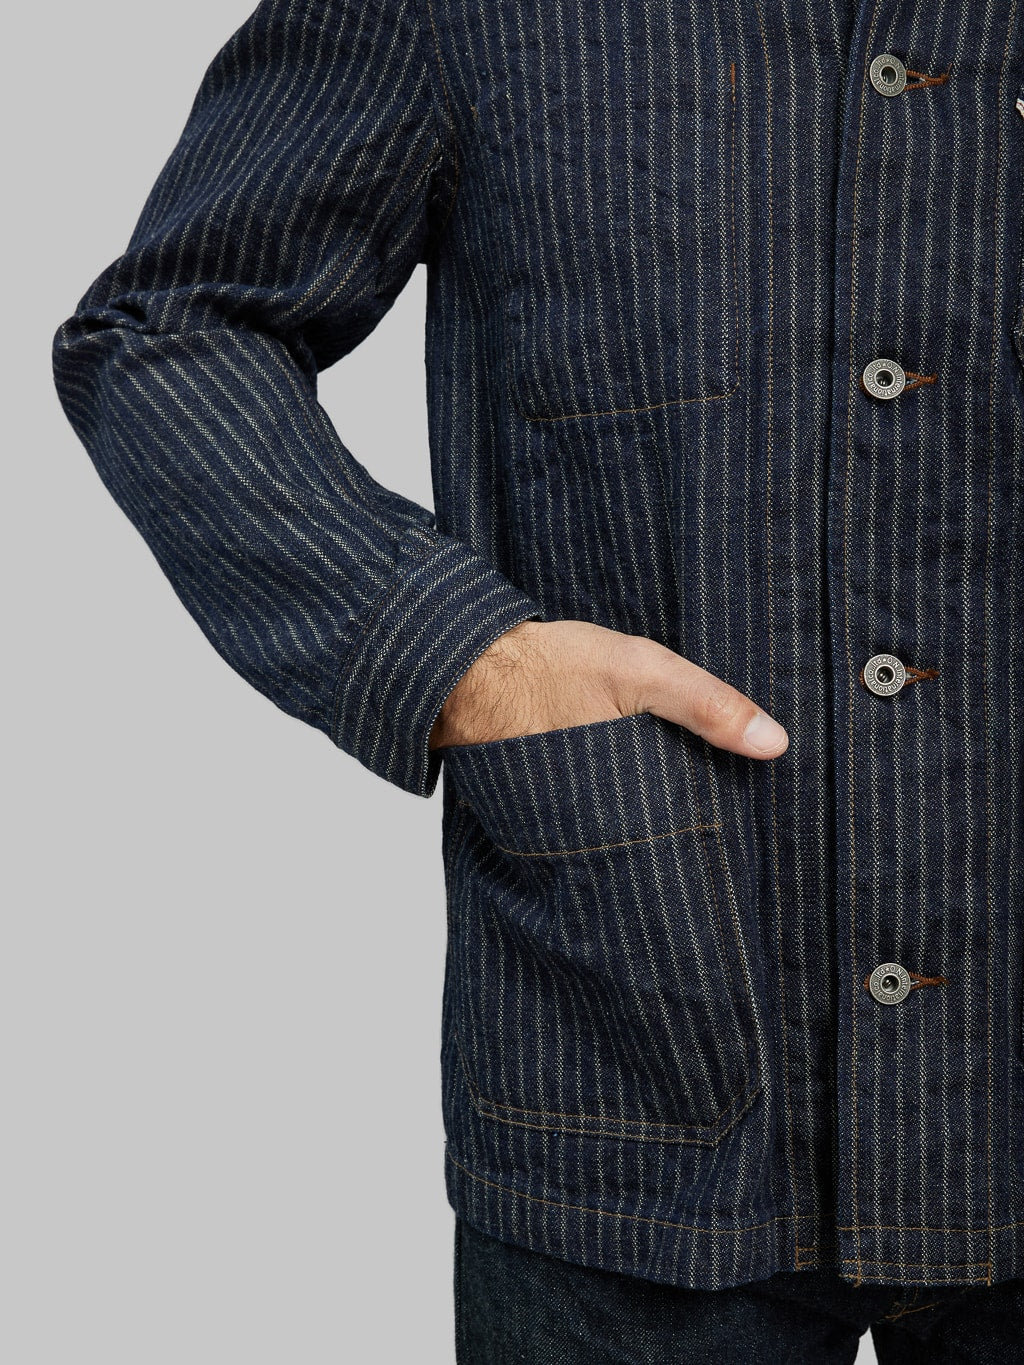 ONI Denim HJS Drop Needle Stitching Jacquard Striped Coverall waist pocket